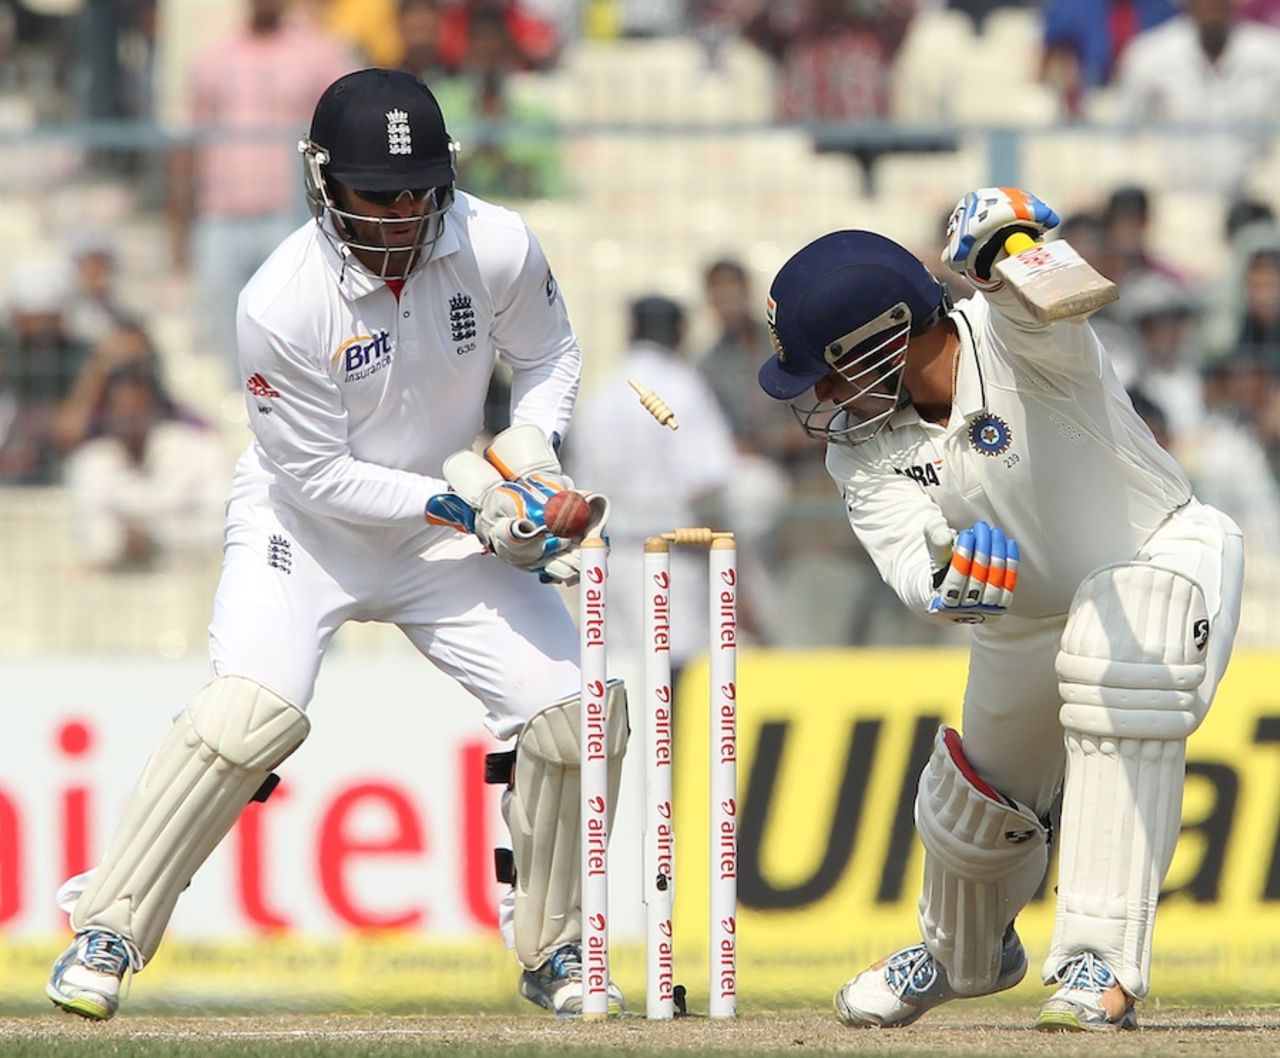 Virender Sehwag looks back at the shattered stumps, India v England, 3rd Test, Kolkata, 4th day, December 8, 2012